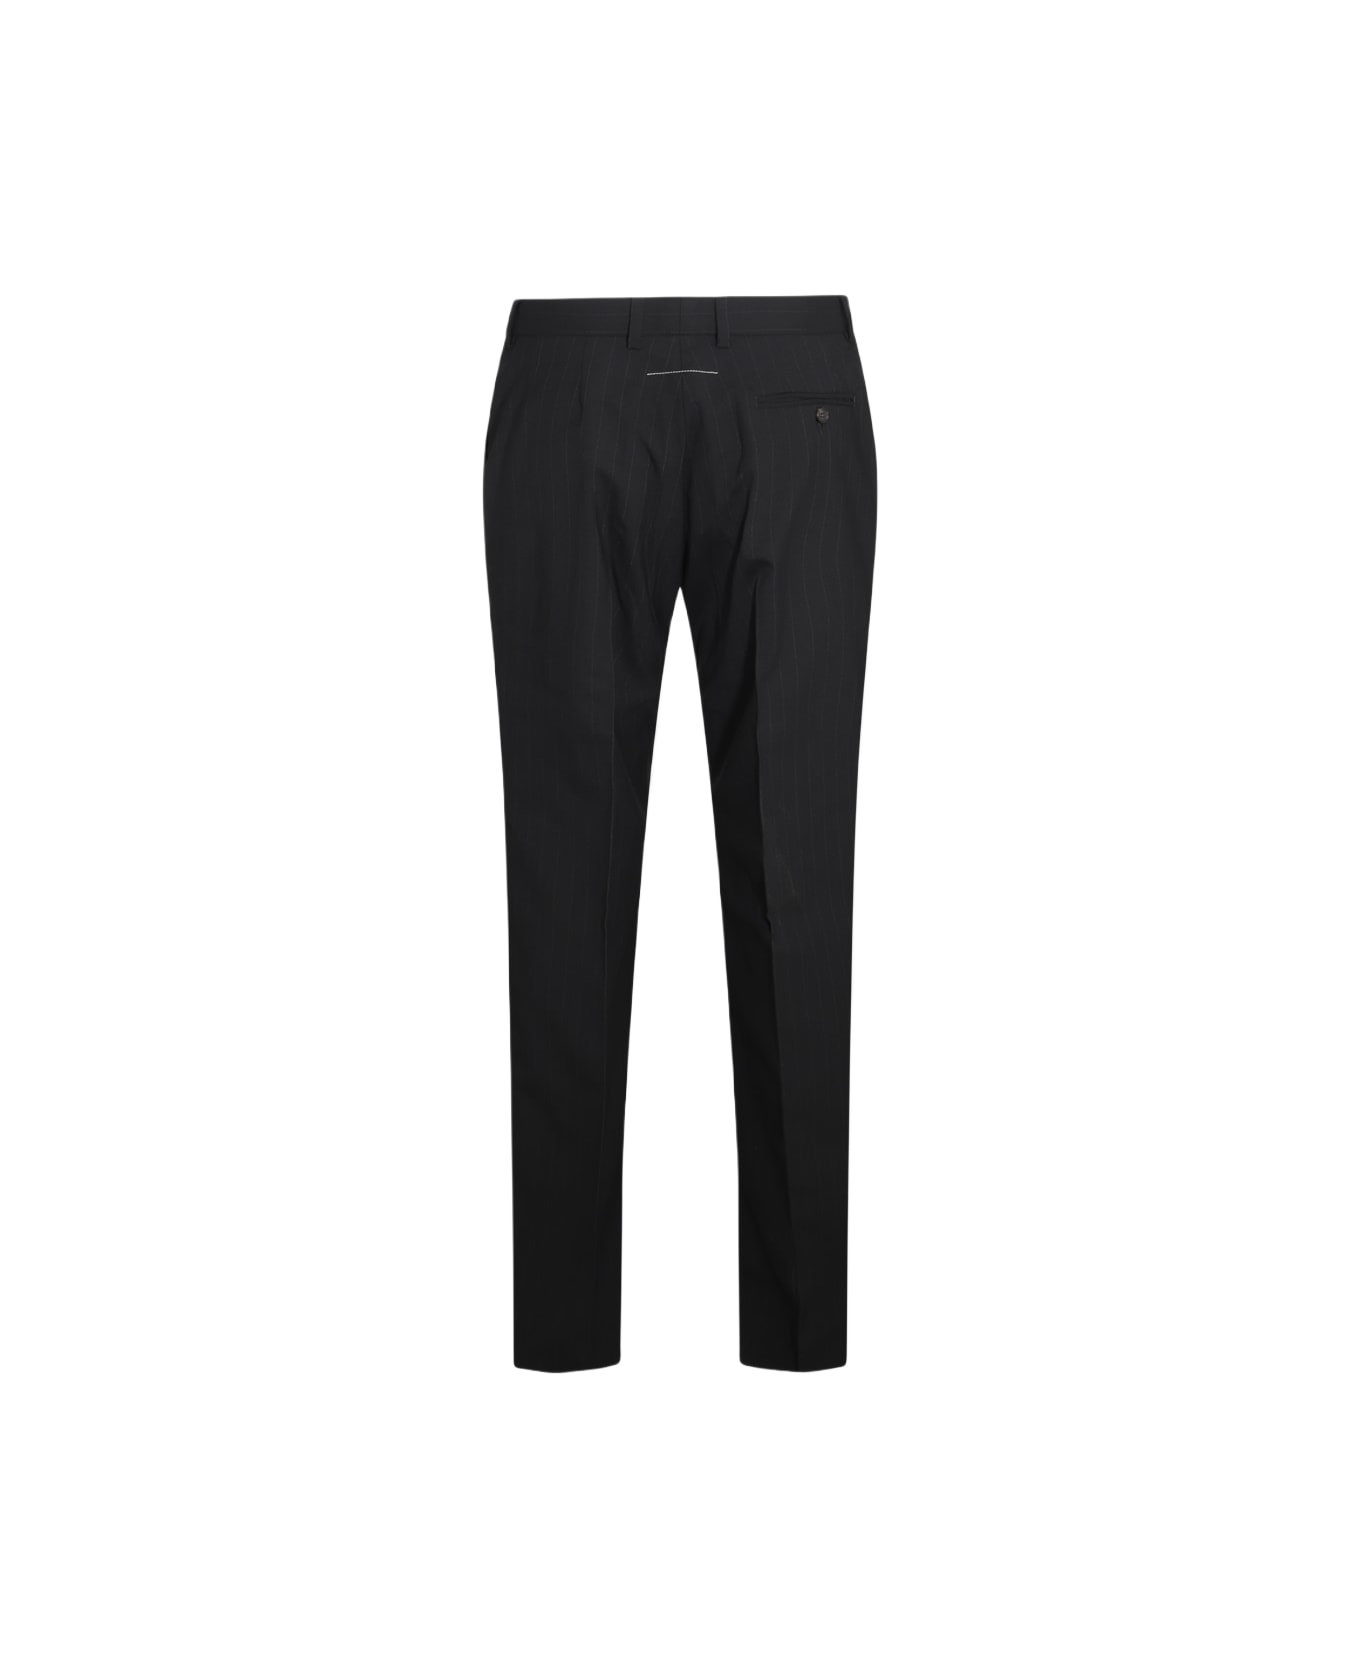 MM6 Maison Margiela Black Virgin Wool Blend Pants - F Black/white